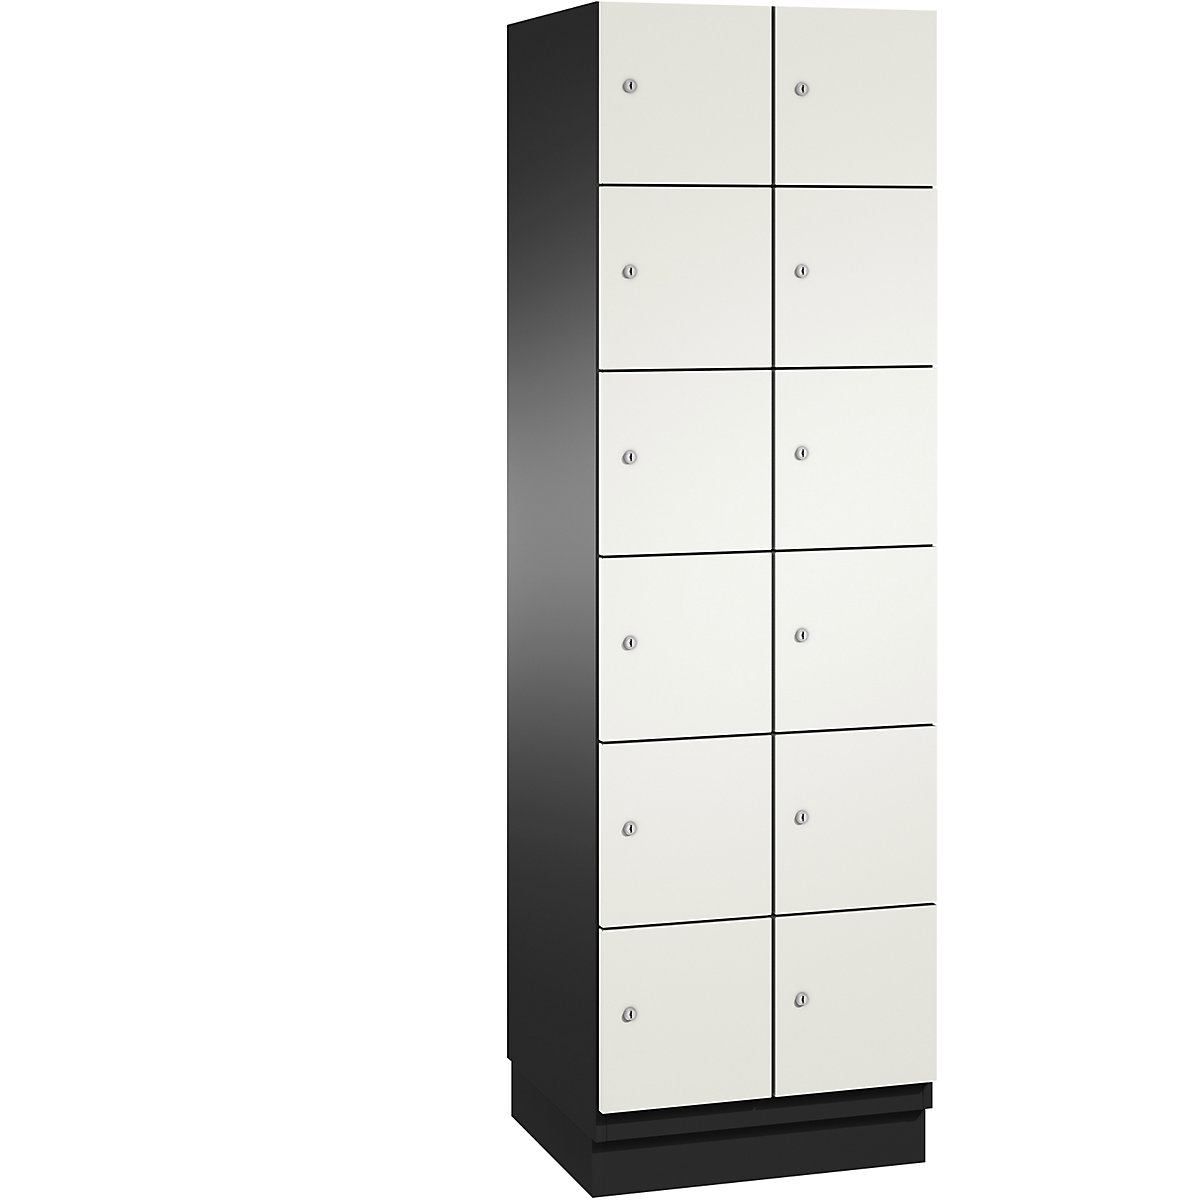 CAMBIO compartment locker with HPL doors – C+P